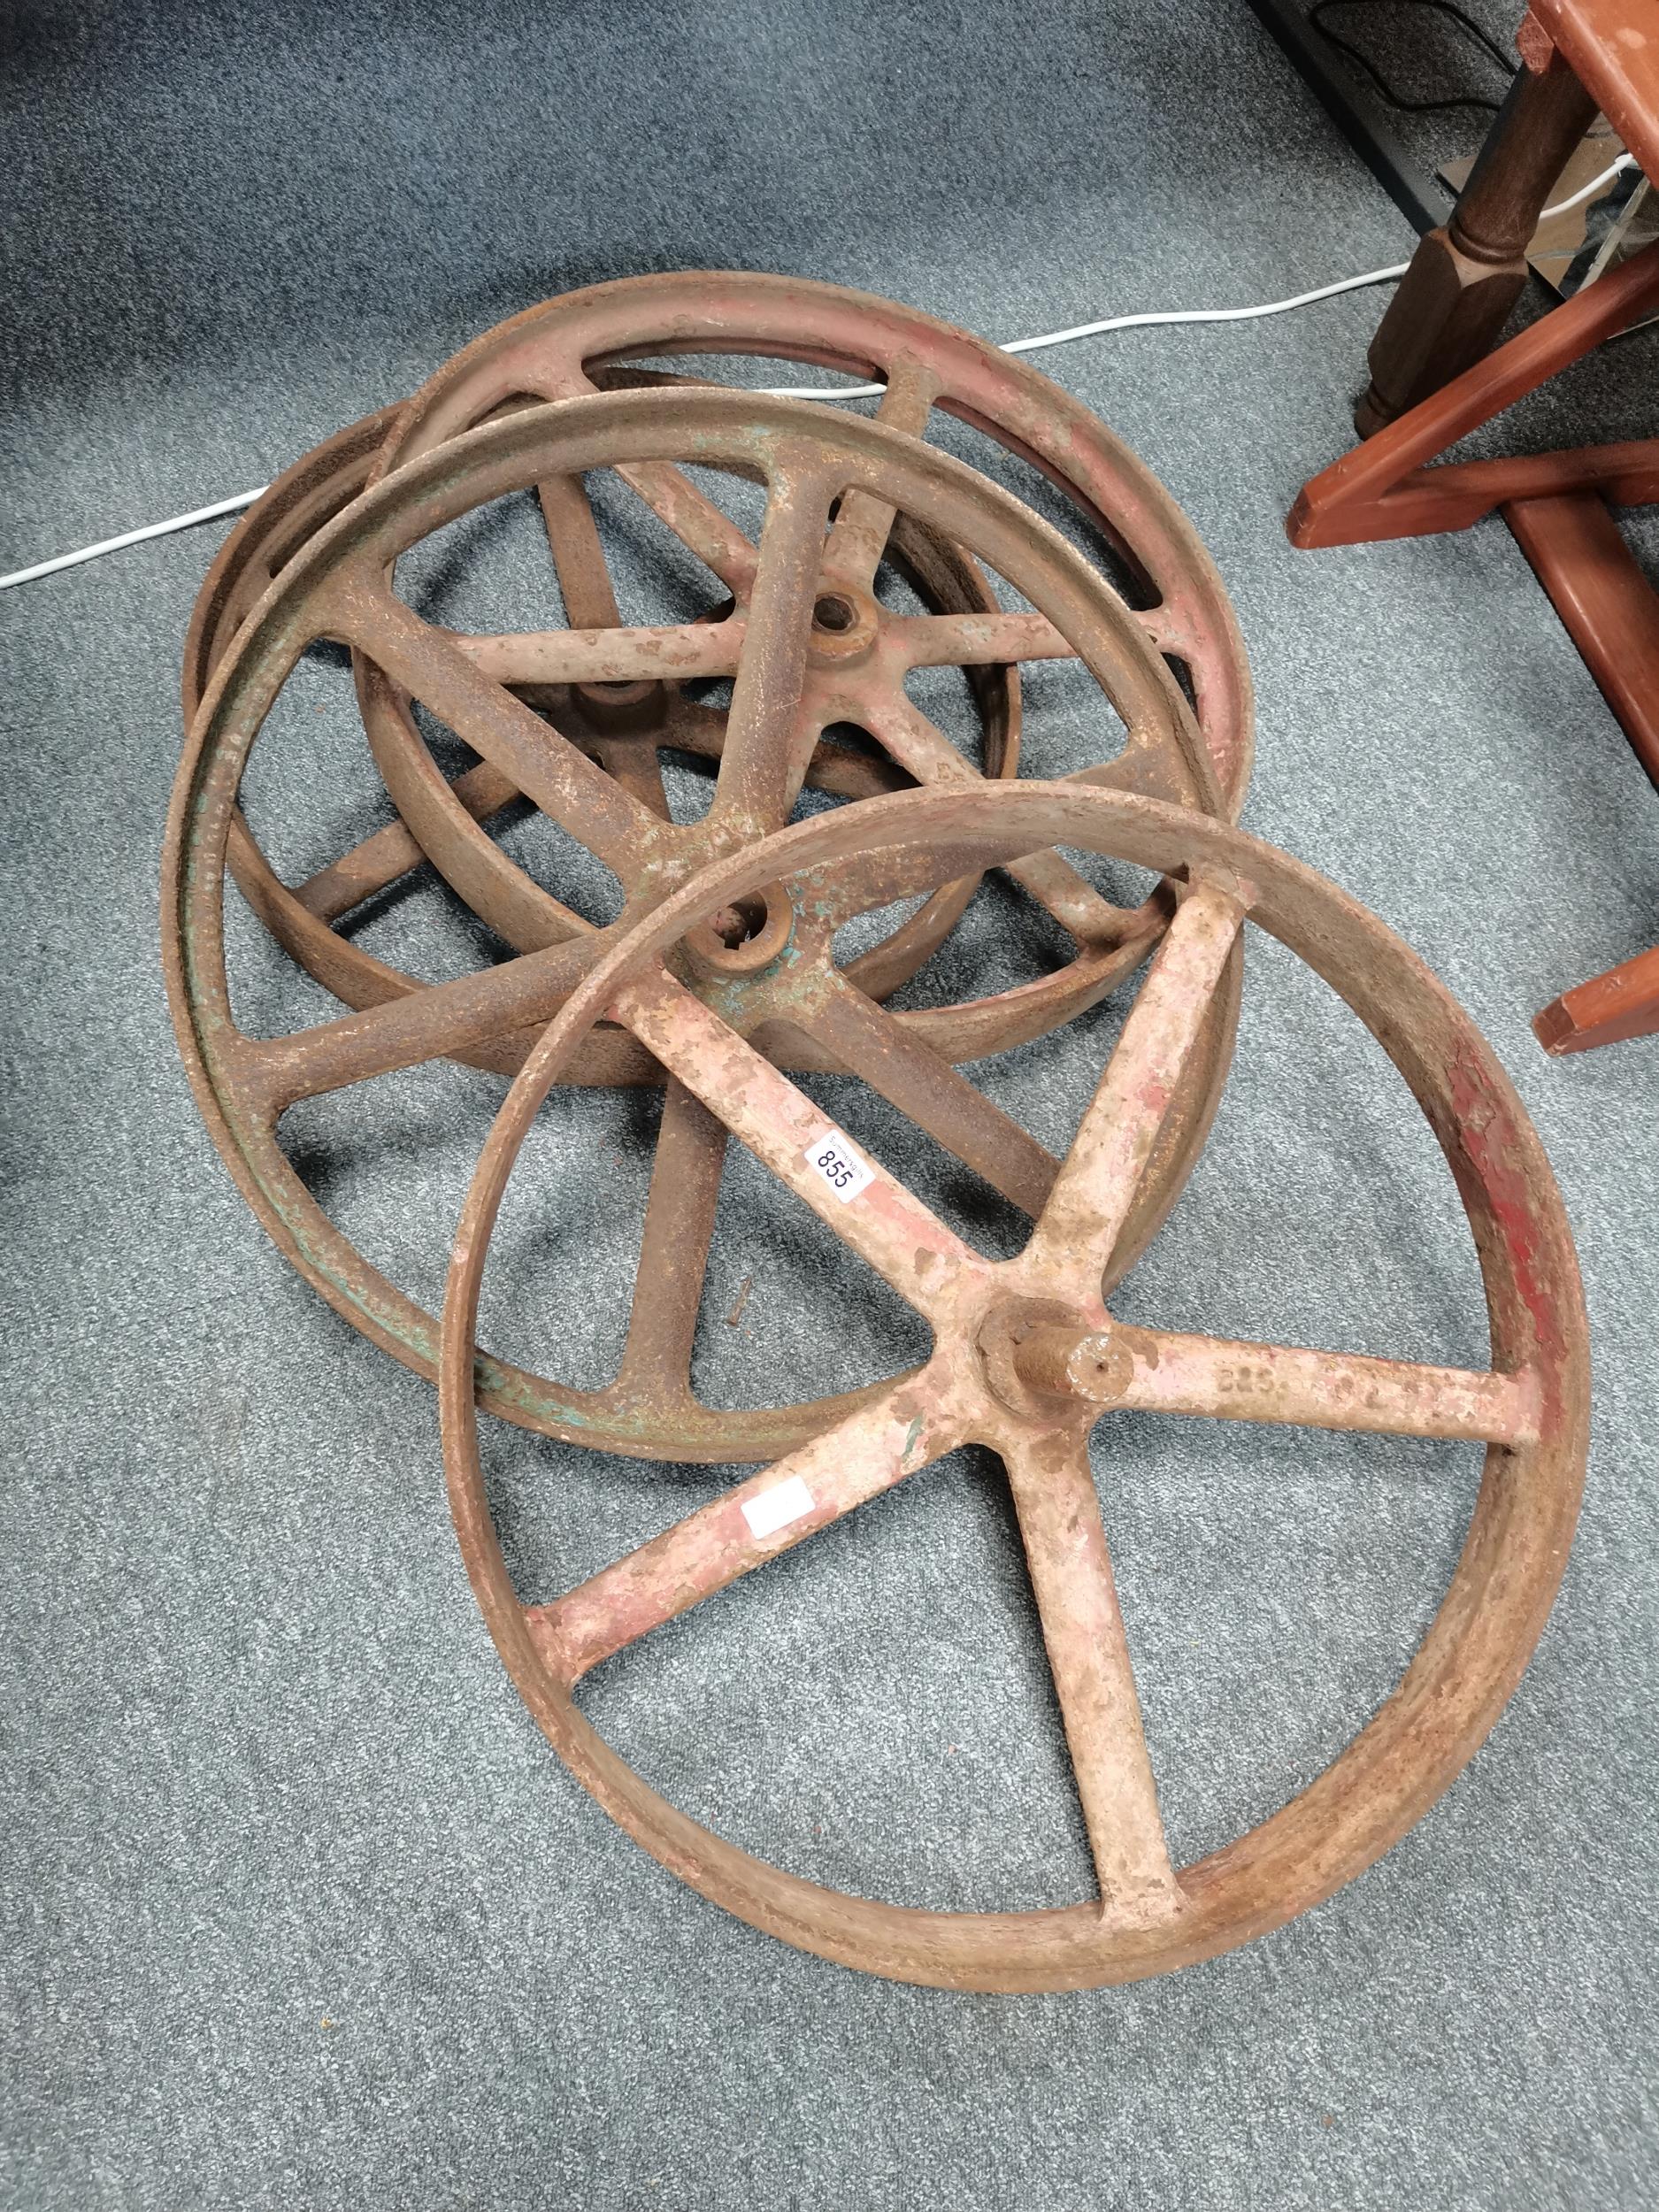 x4 vintage cast iron wheels